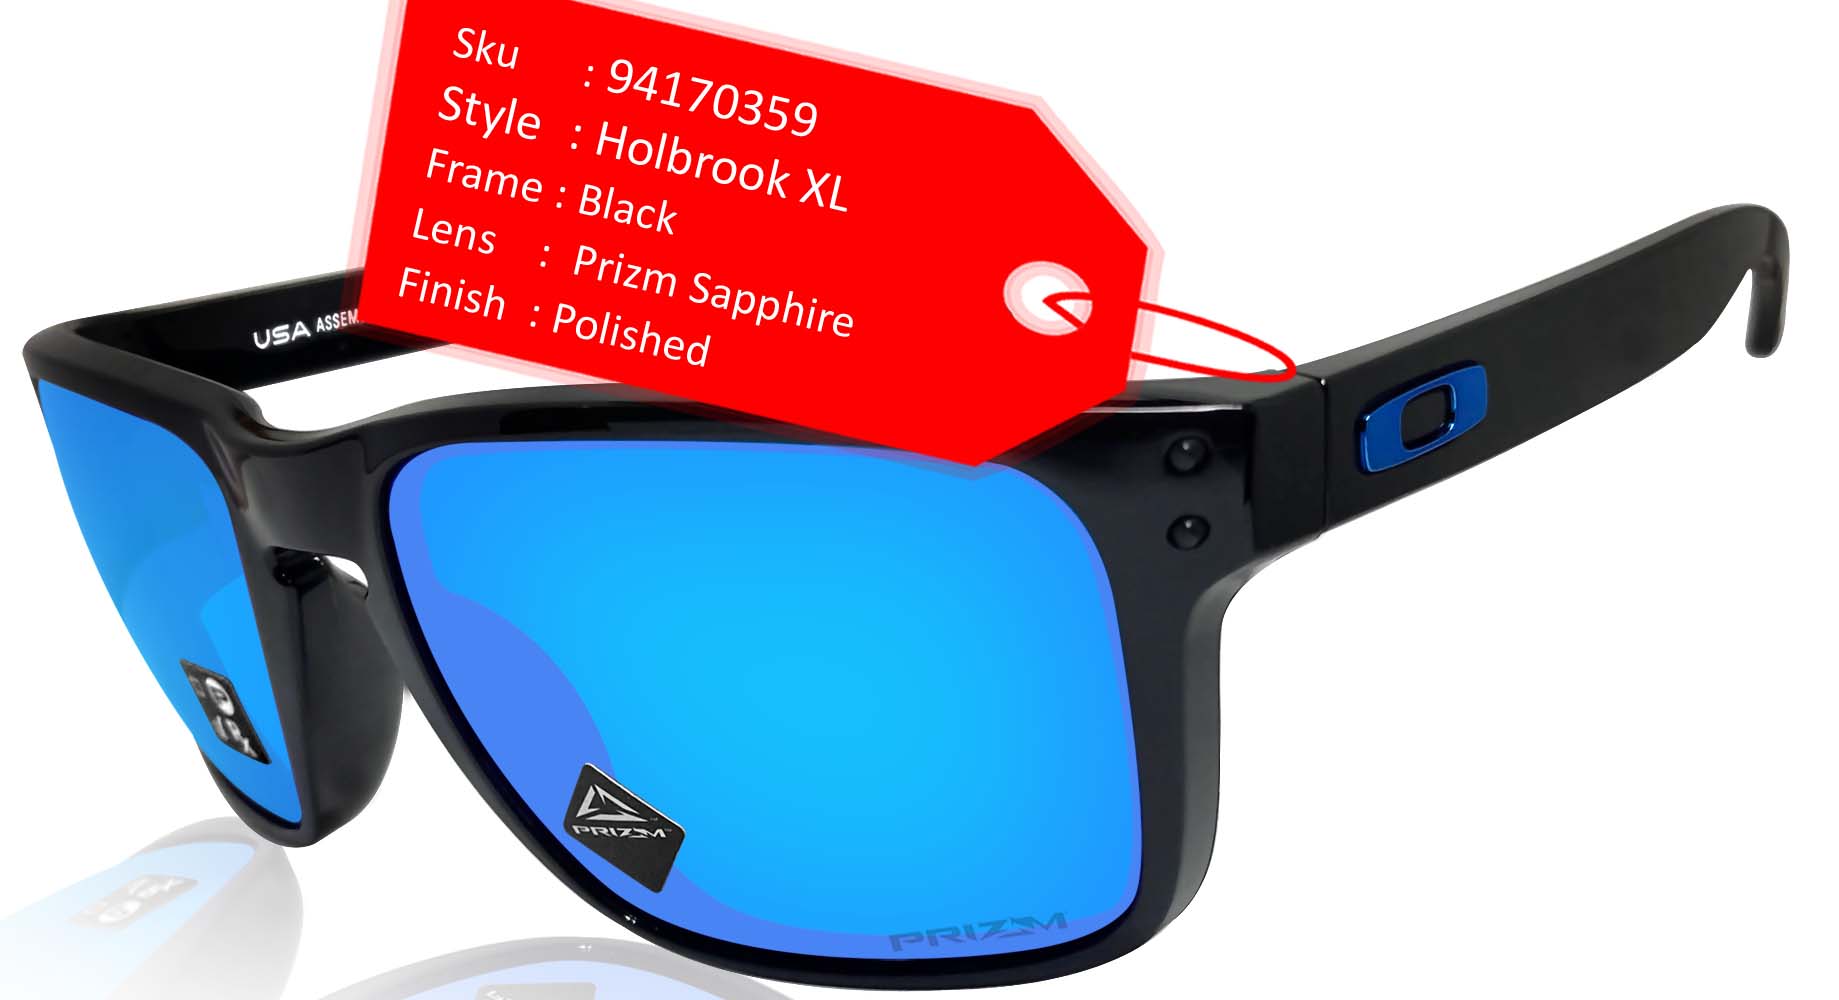 Oakley Holbrook Sunglasses (Matte Black Prizmatic Frame, Prizm Sapphire  Polarized Lens) with Country Flag Microbag, Casual